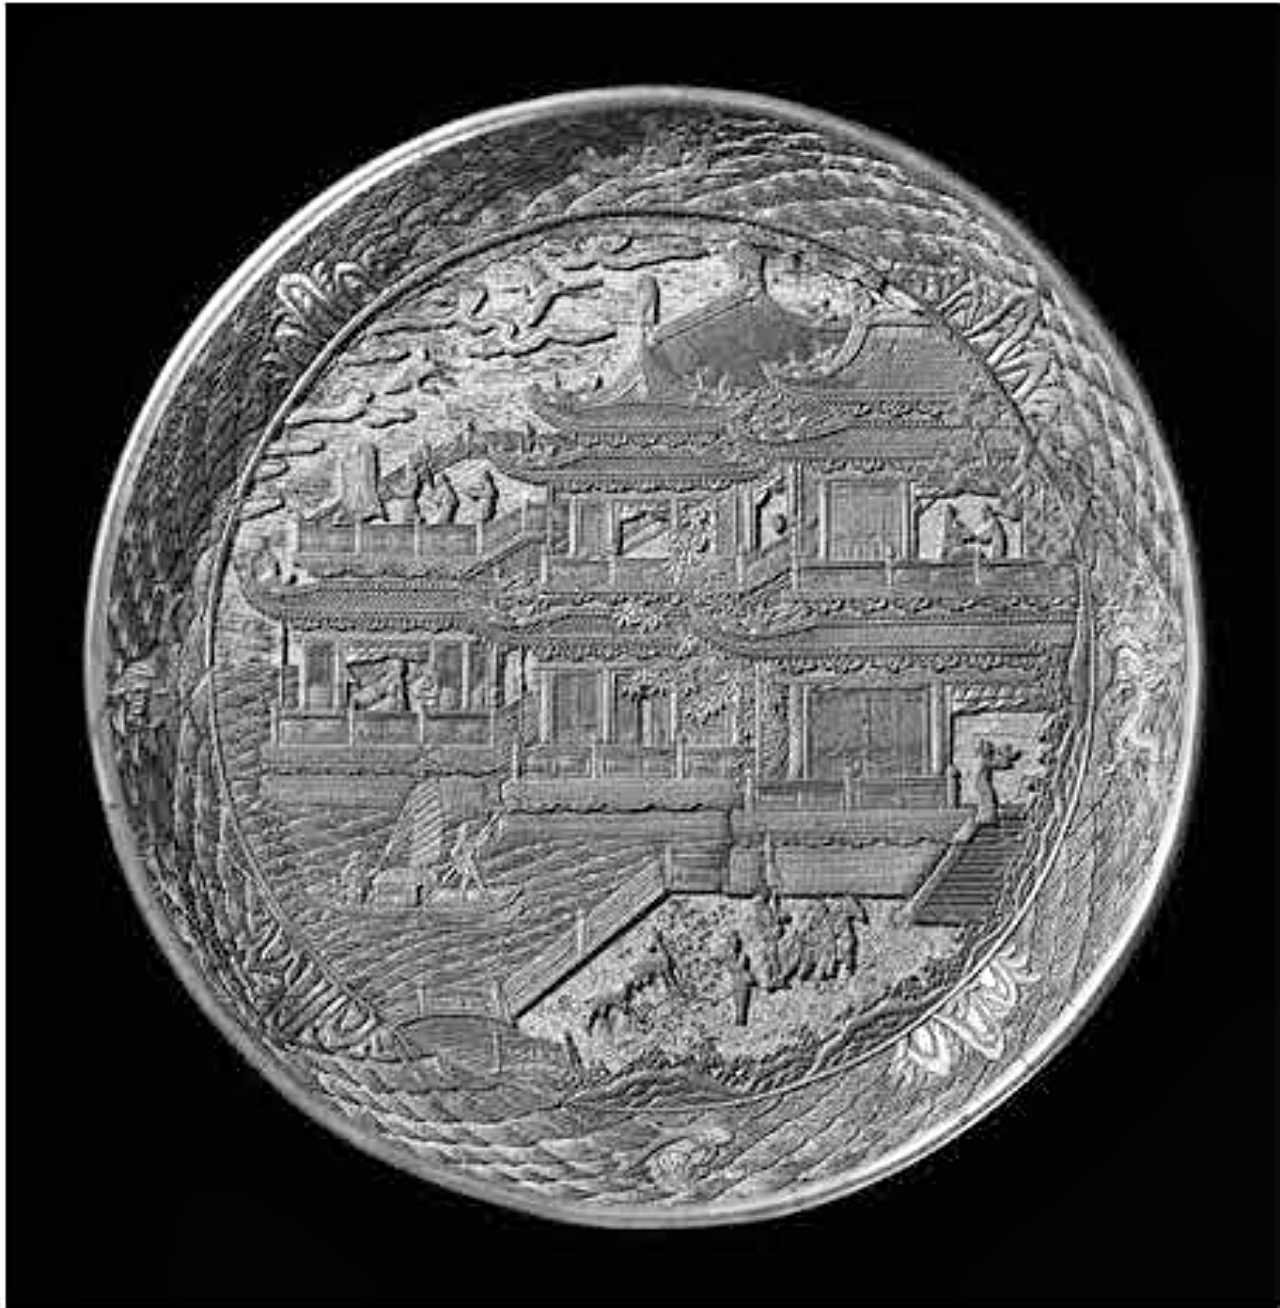 圖37a  明,弘治二年(1489),副彩滕王閣詩意圖 圓盤,大英博物館藏 © Trustees of the British Museum。